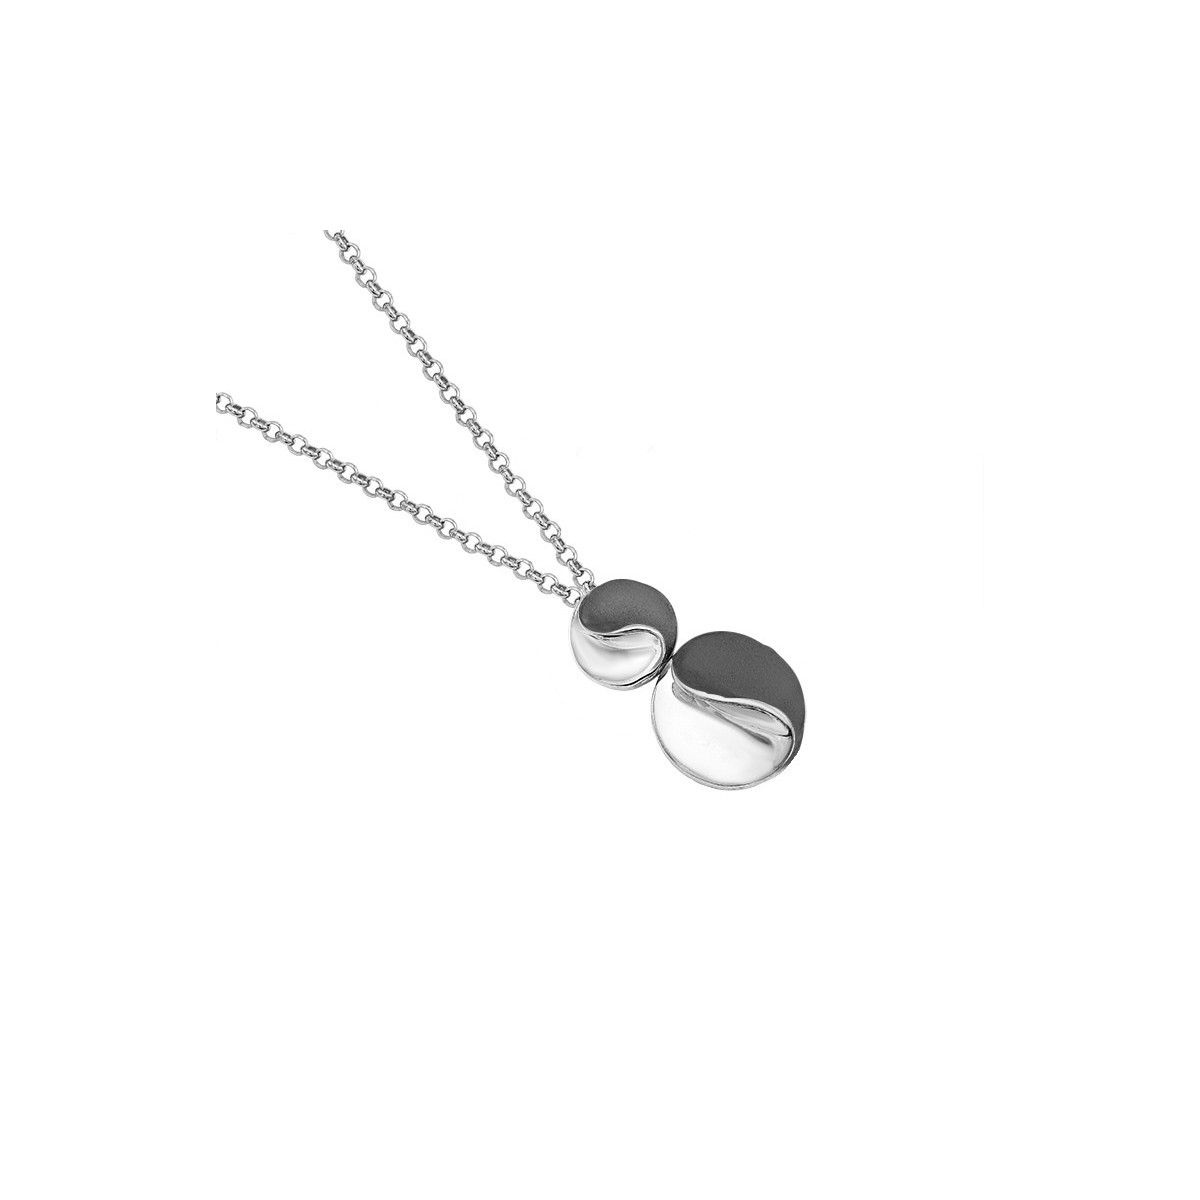 SUN Necklace in Silver.  Black Ruthenium